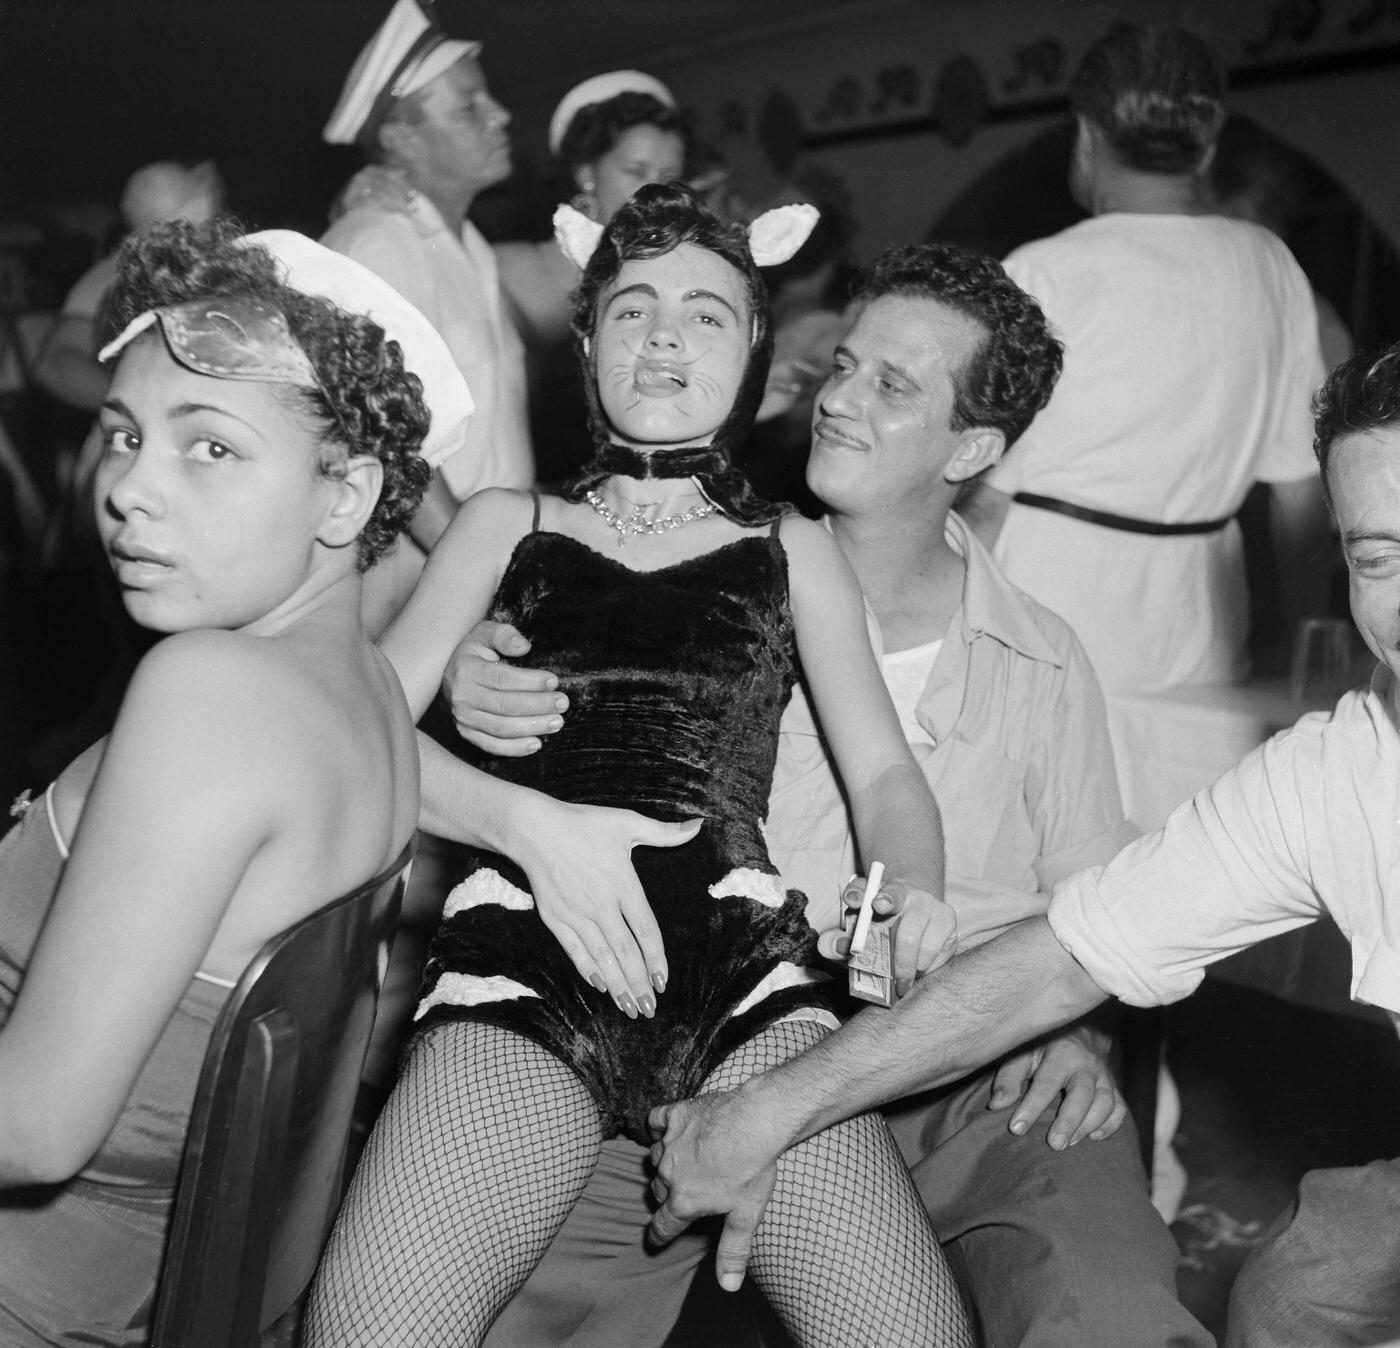 Costumed Partygoers Dancing, Carnival in Rio 1953